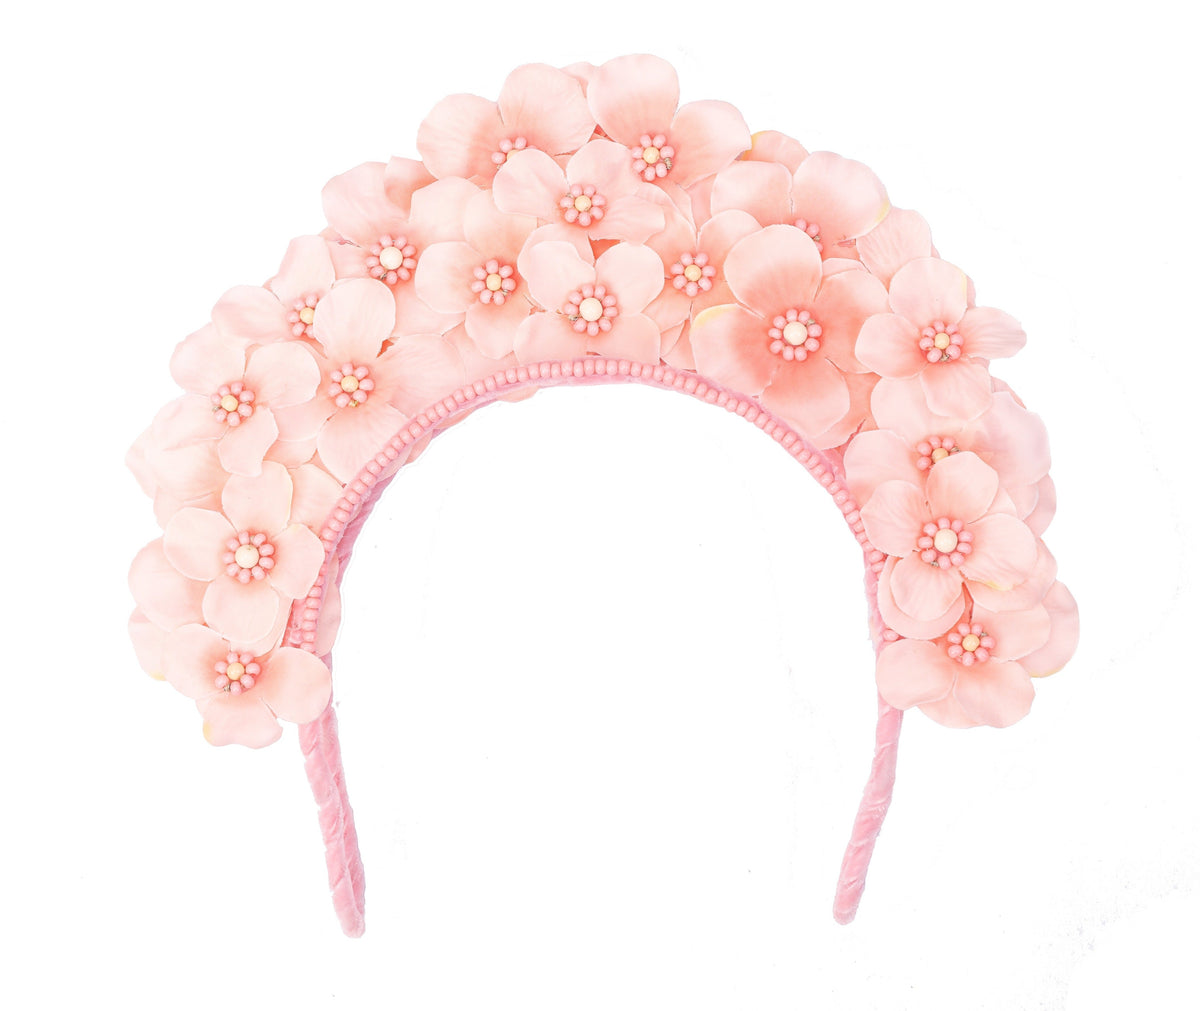 Flower Crown Headpiece in Peony Pink